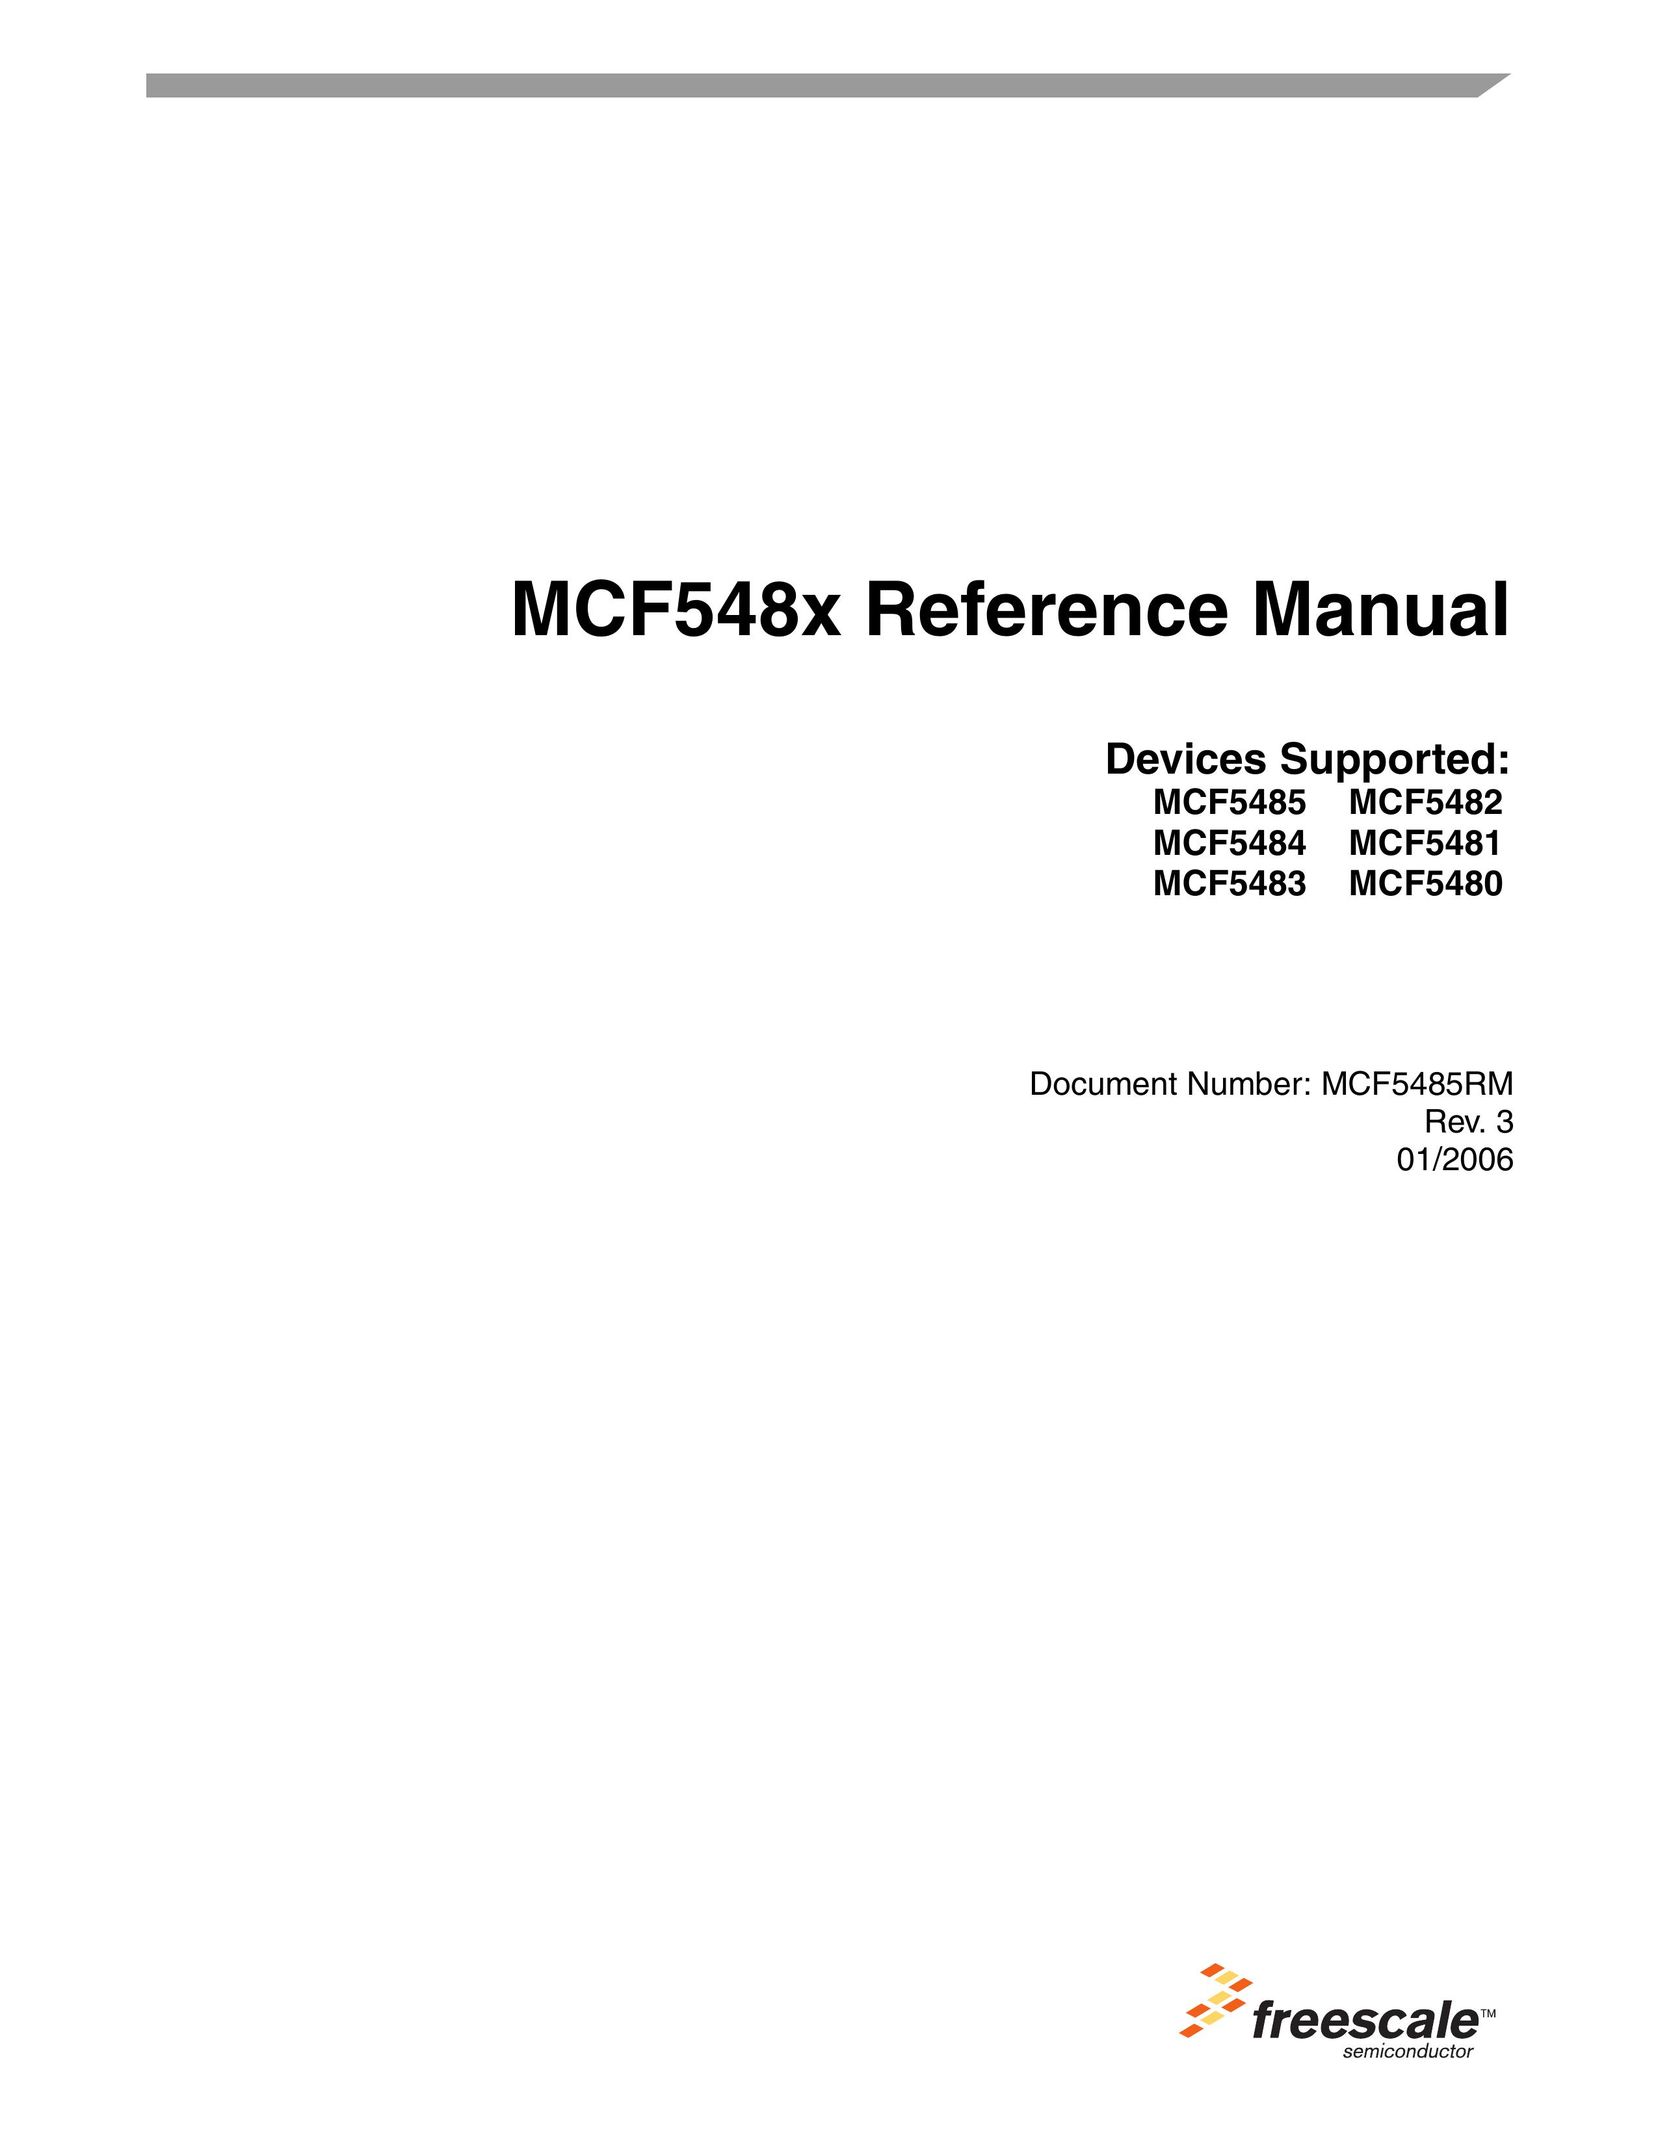 Freescale Semiconductor MCF5483 Computer Hardware User Manual